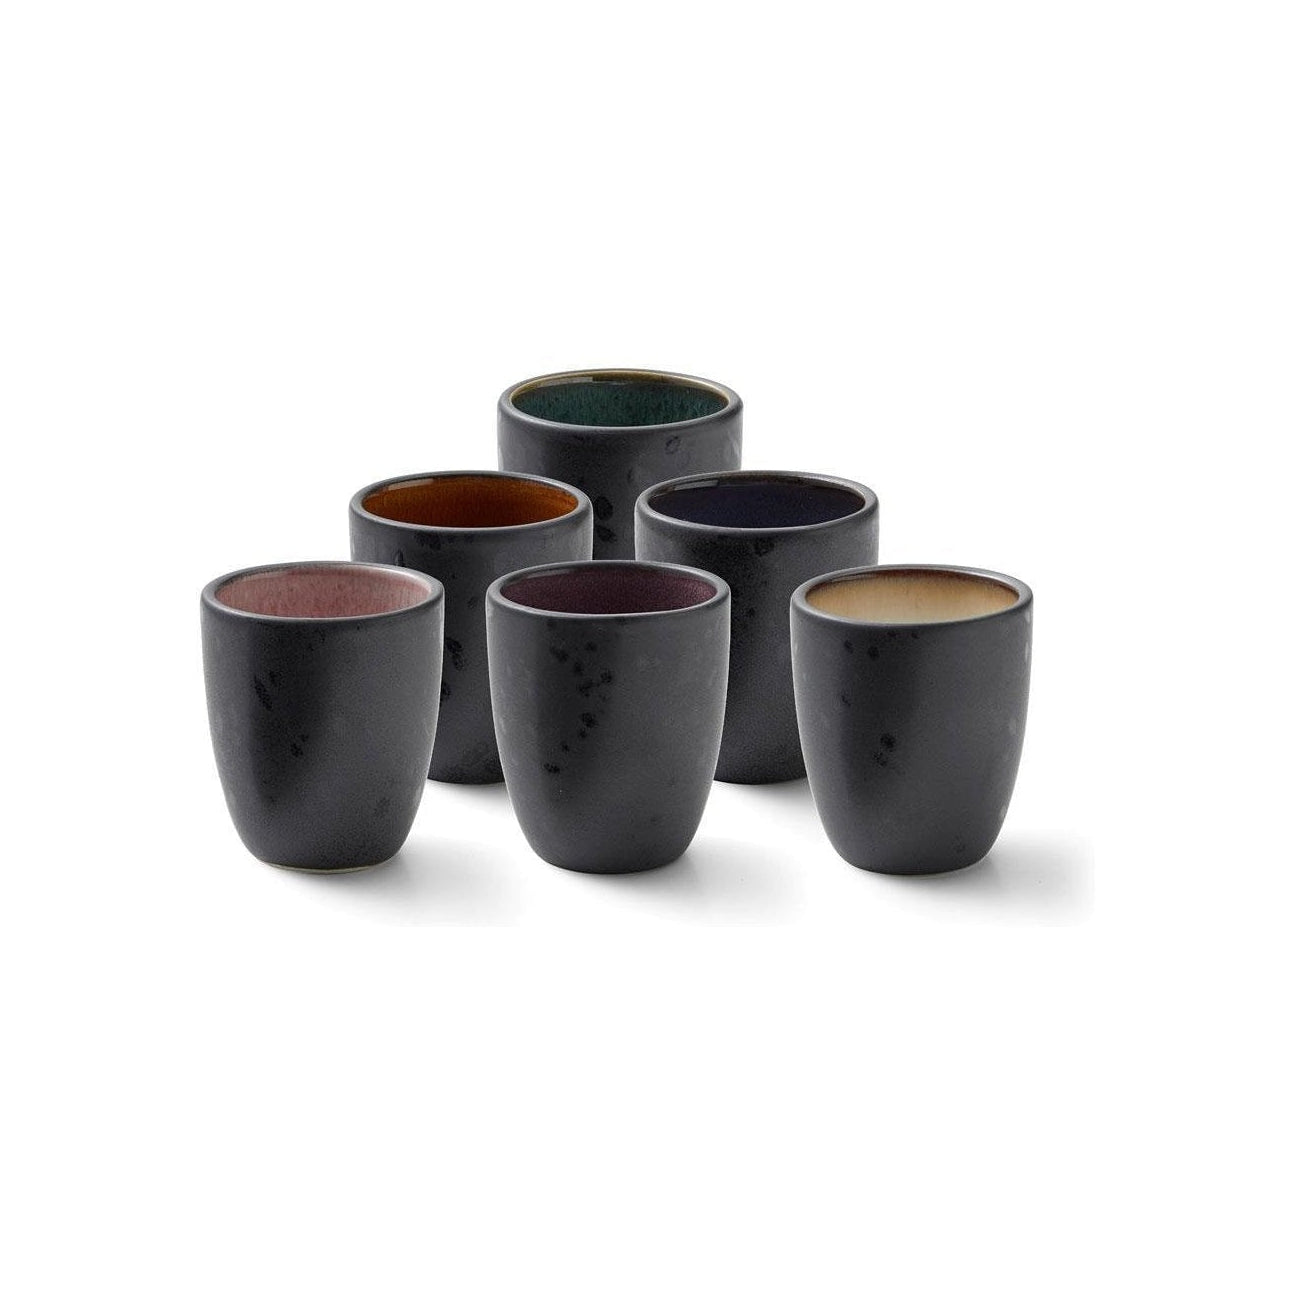 Bitz Espresso Cups Set, různé barvy, 6 ks.